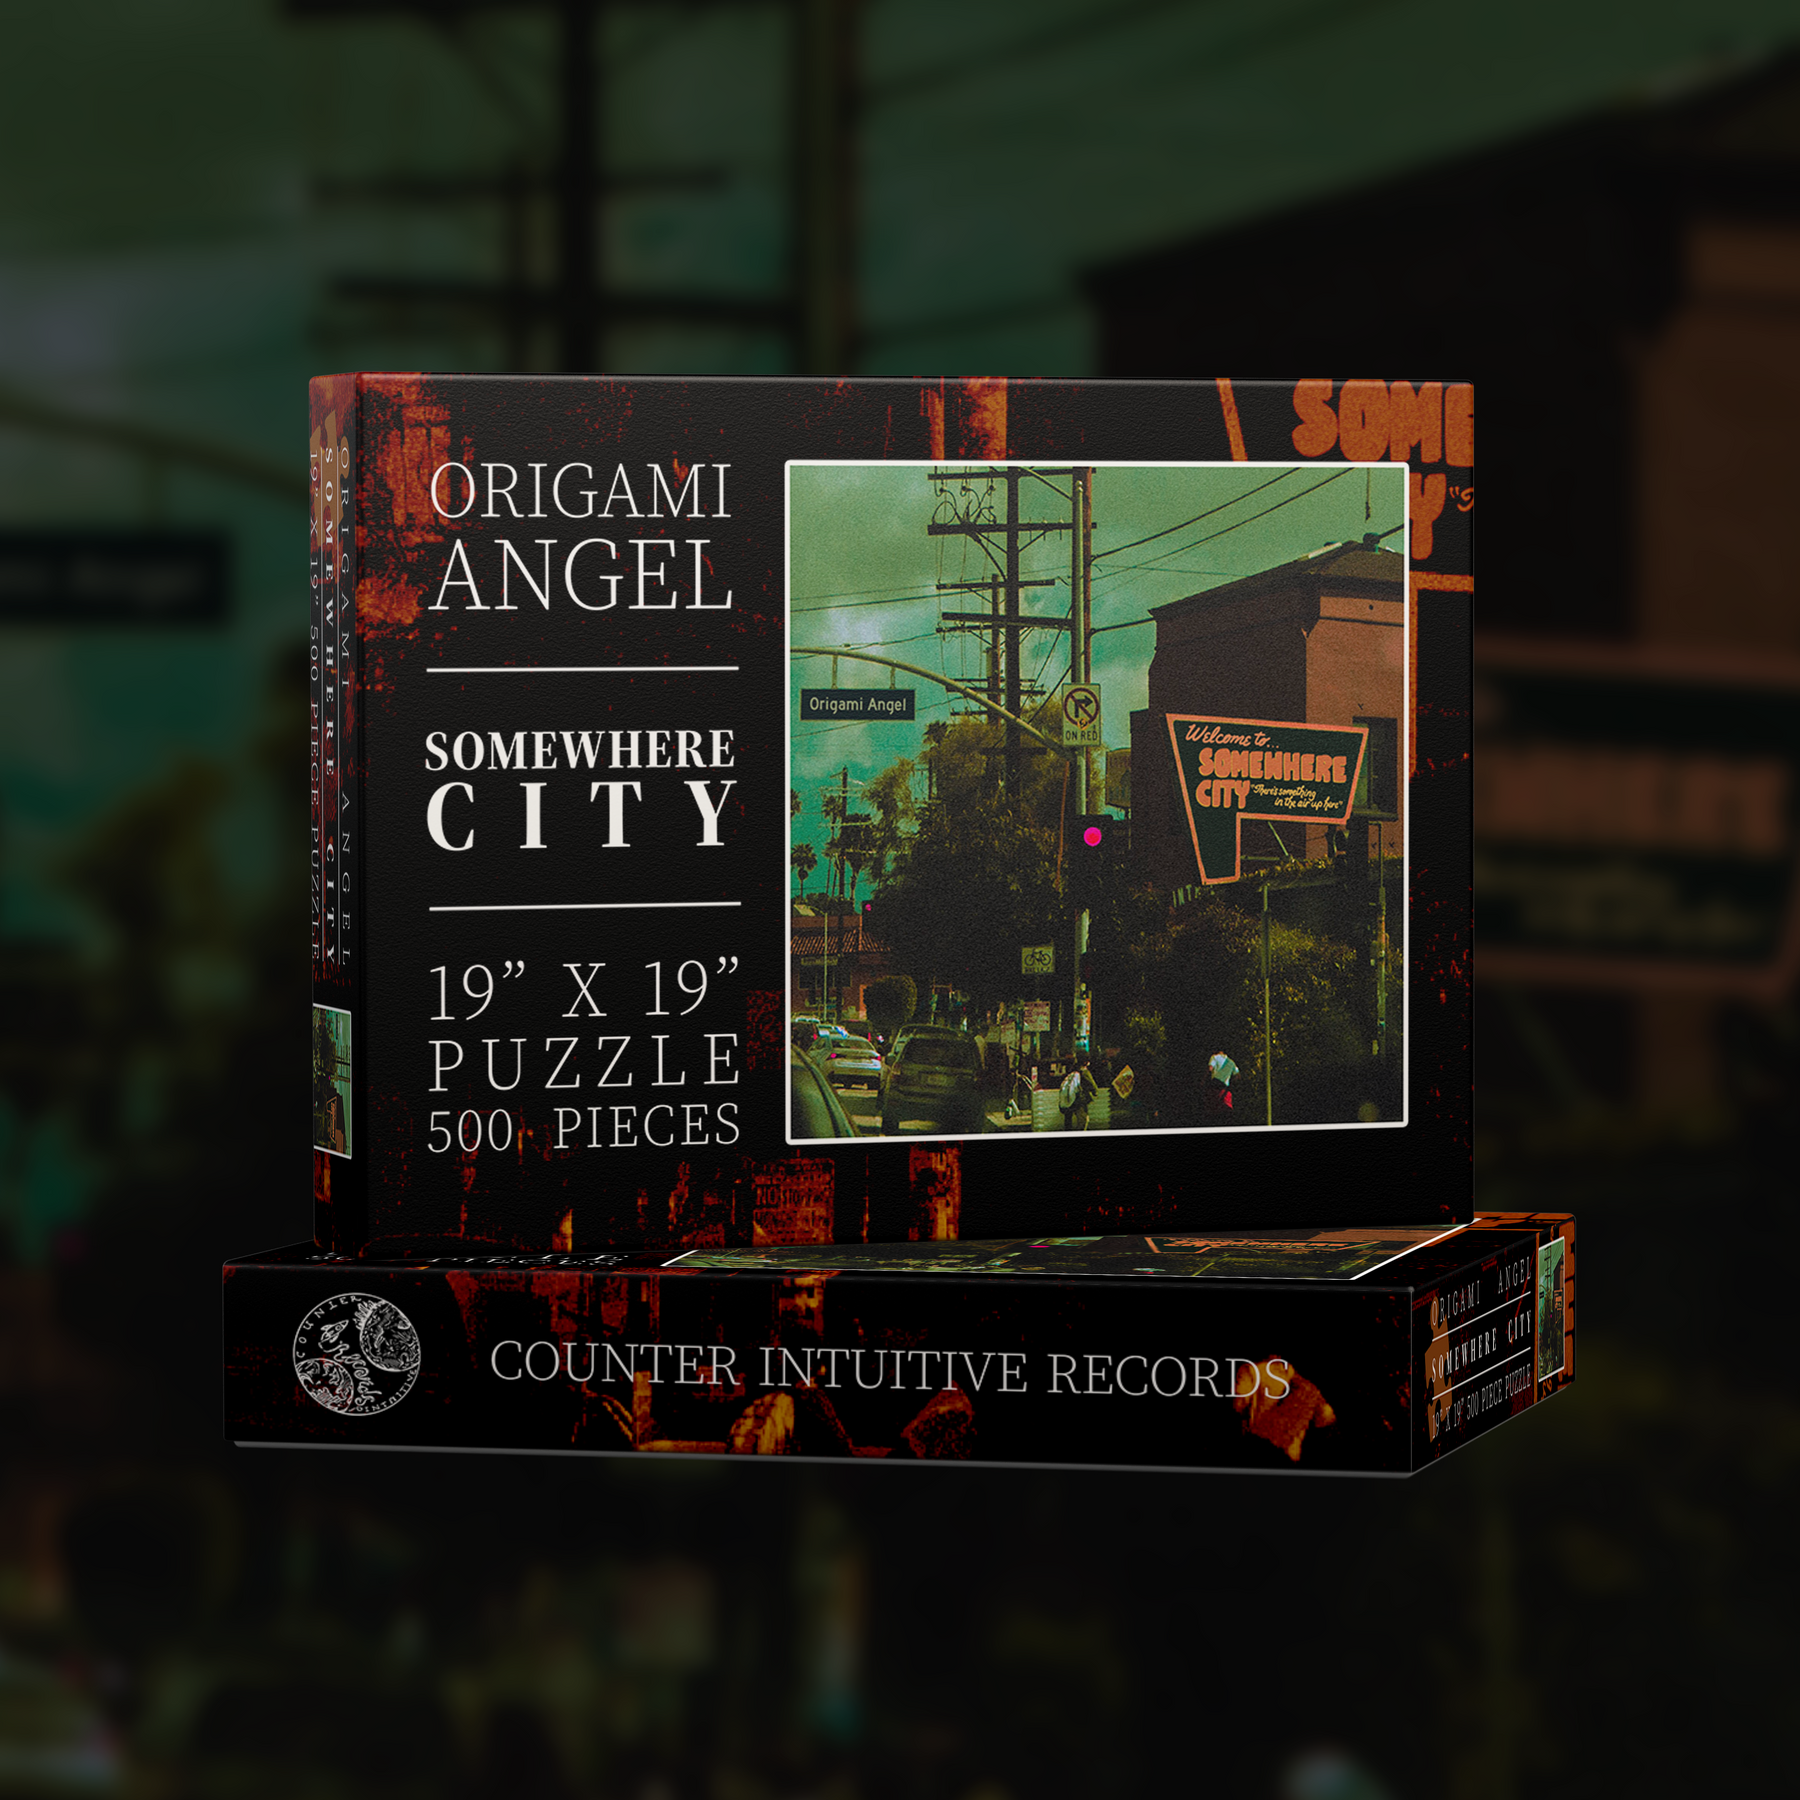 Origami Angel - Somewhere City Puzzle